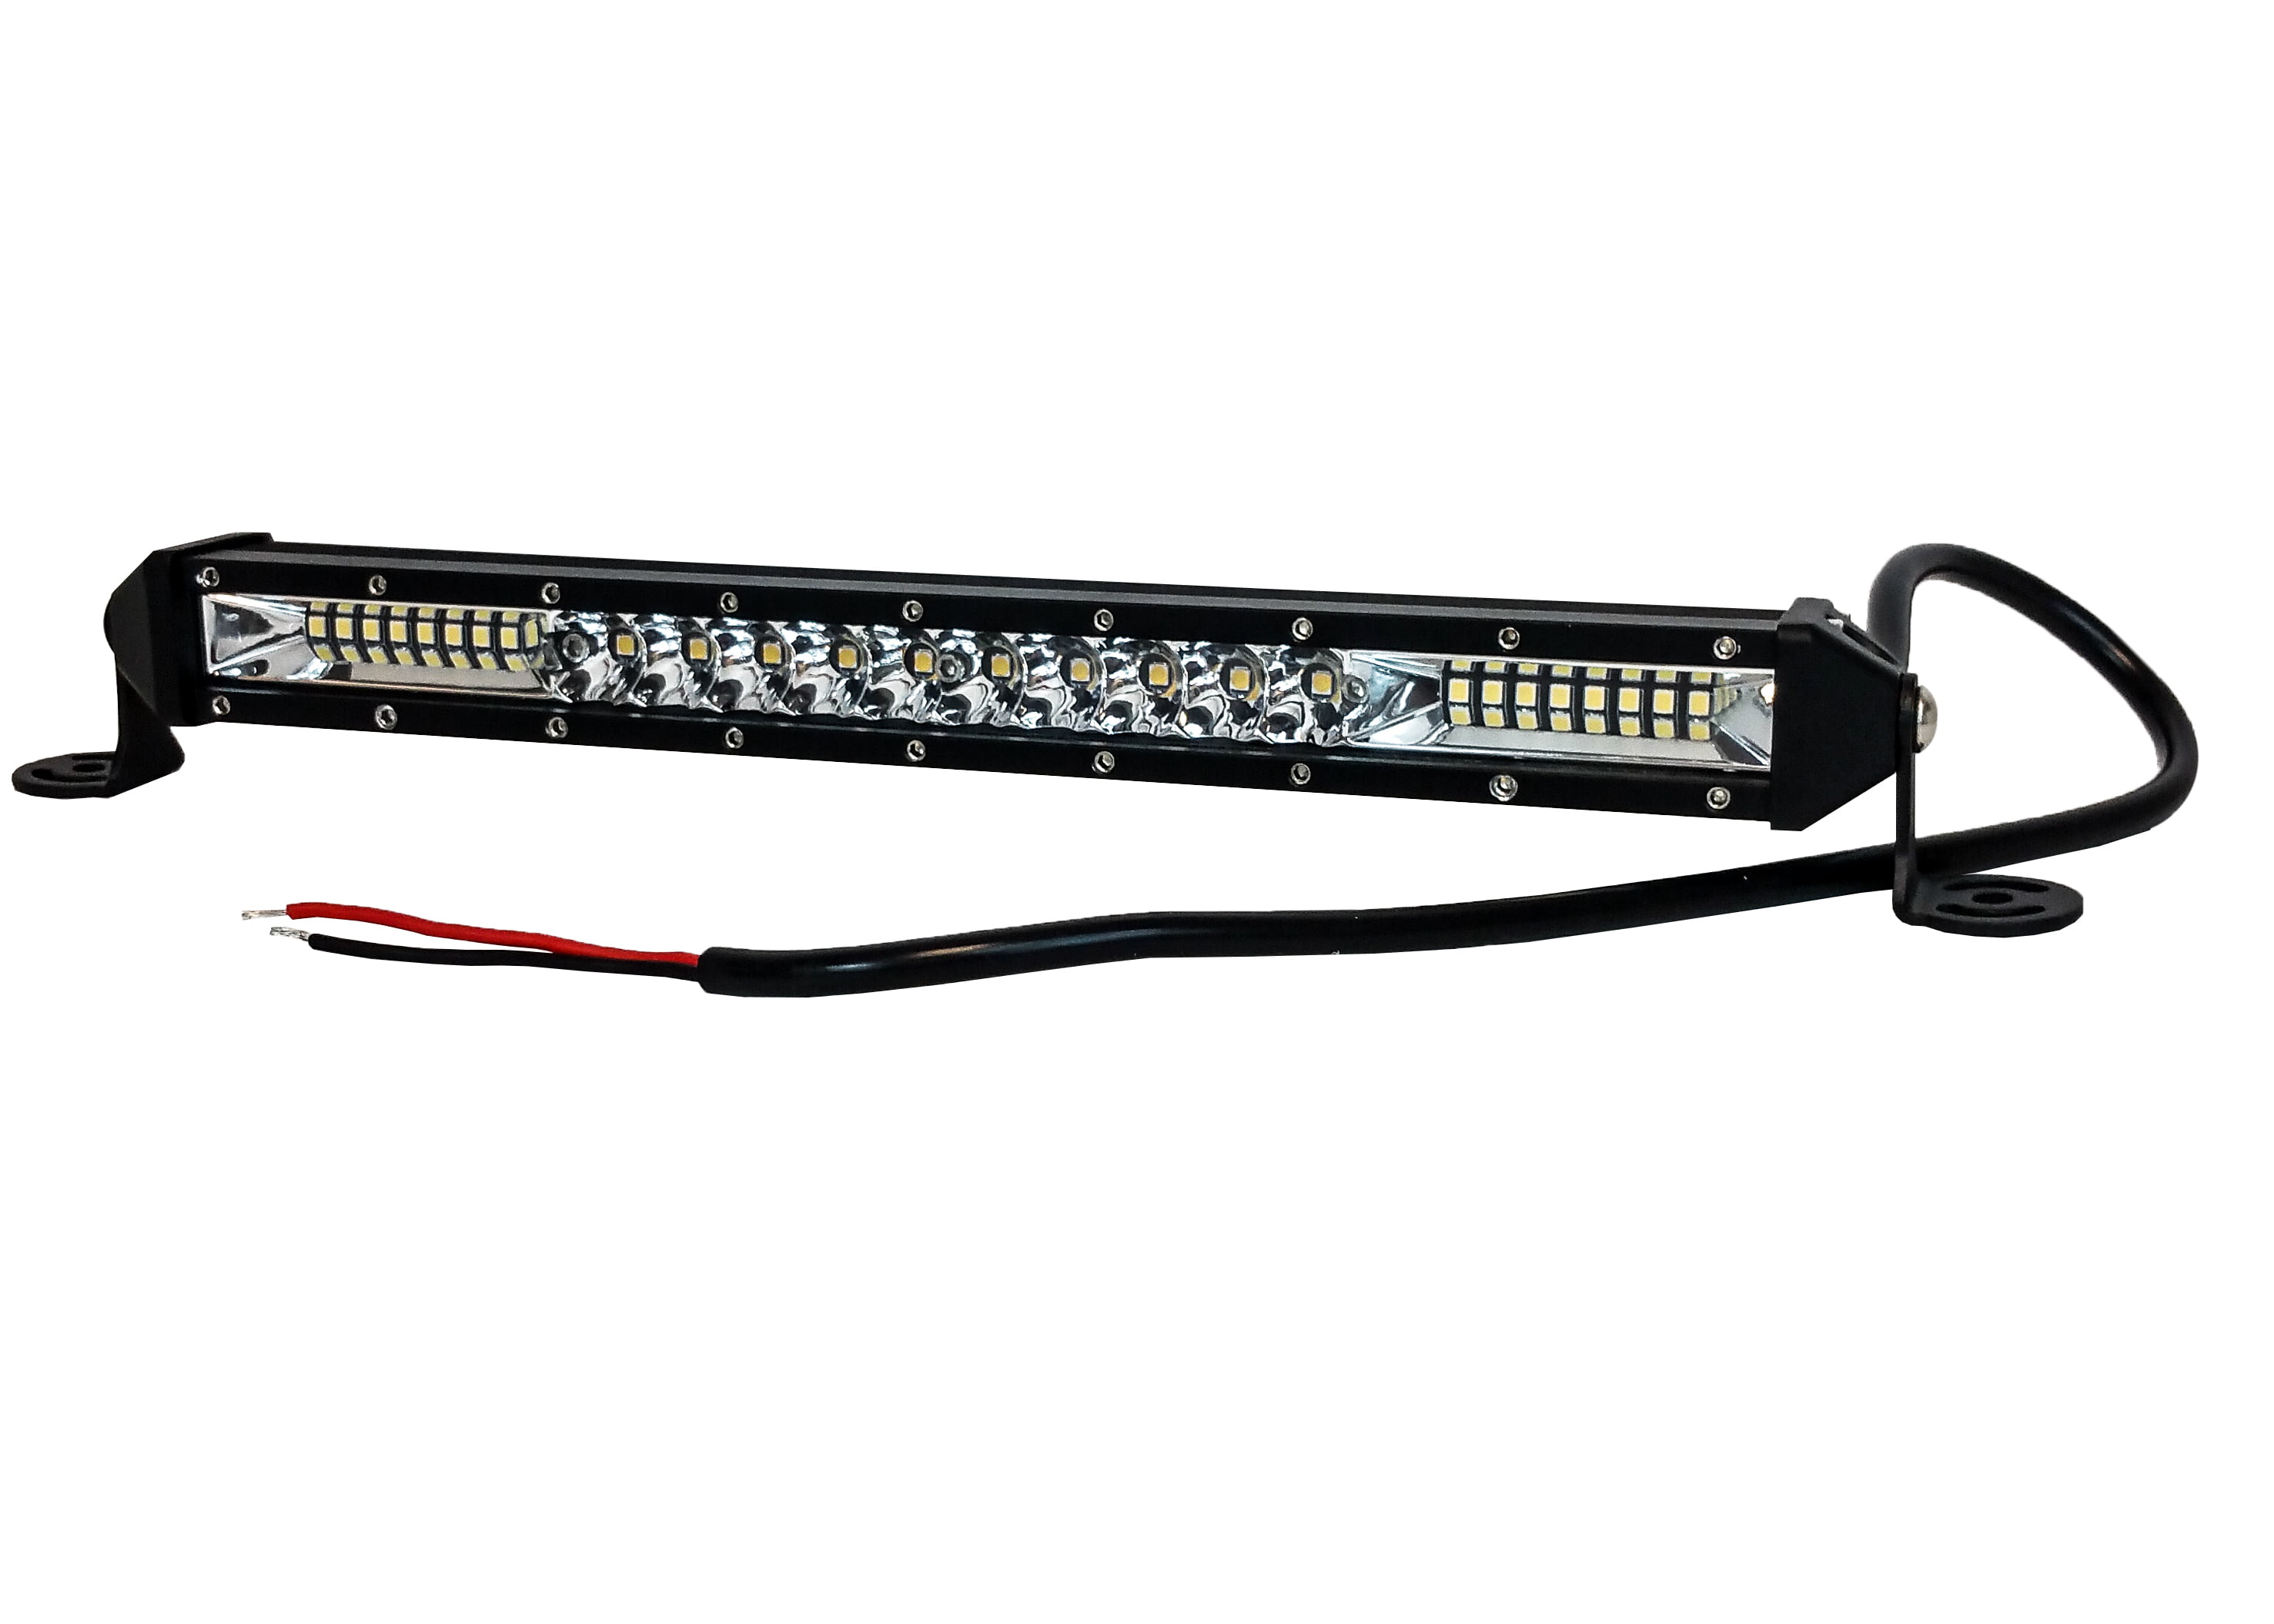 OSRAM C10W Signallampen Autolampe 6438-02B, CHF 4,95